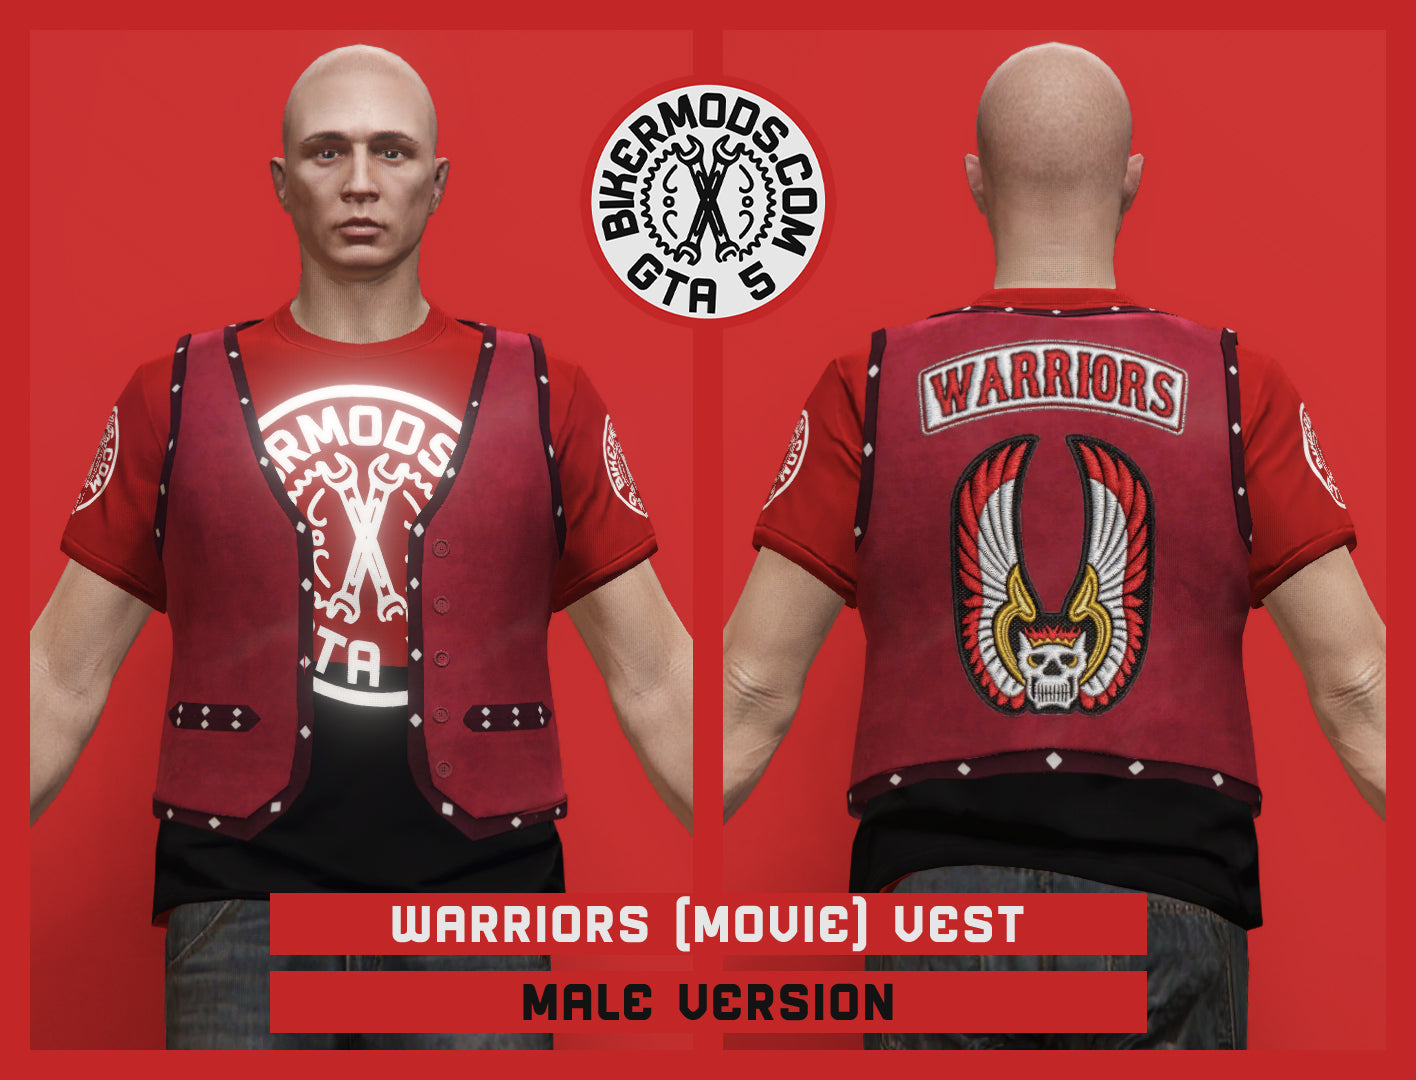 Warriors Vest (Male) Open Movie Version